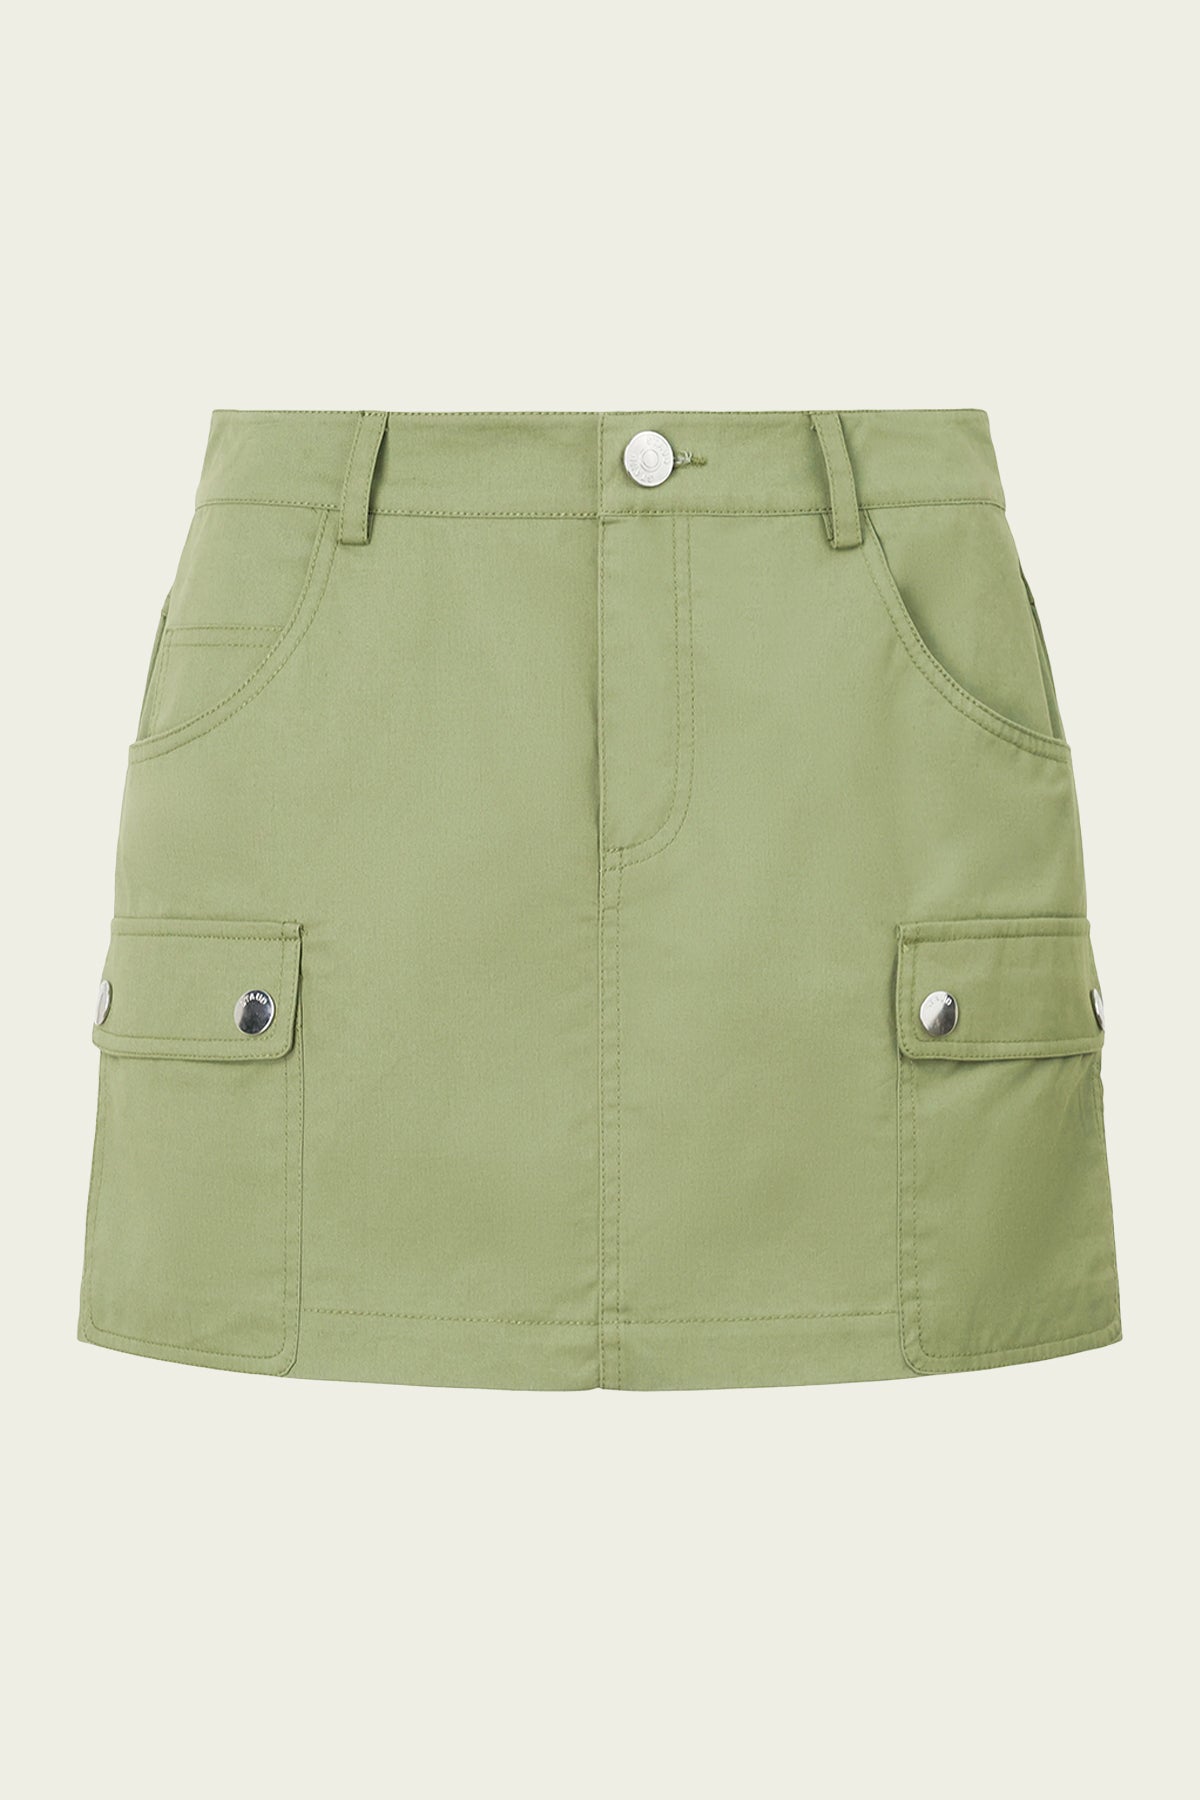 San Carlos Mini Skirt in Moss - shop-olivia.com